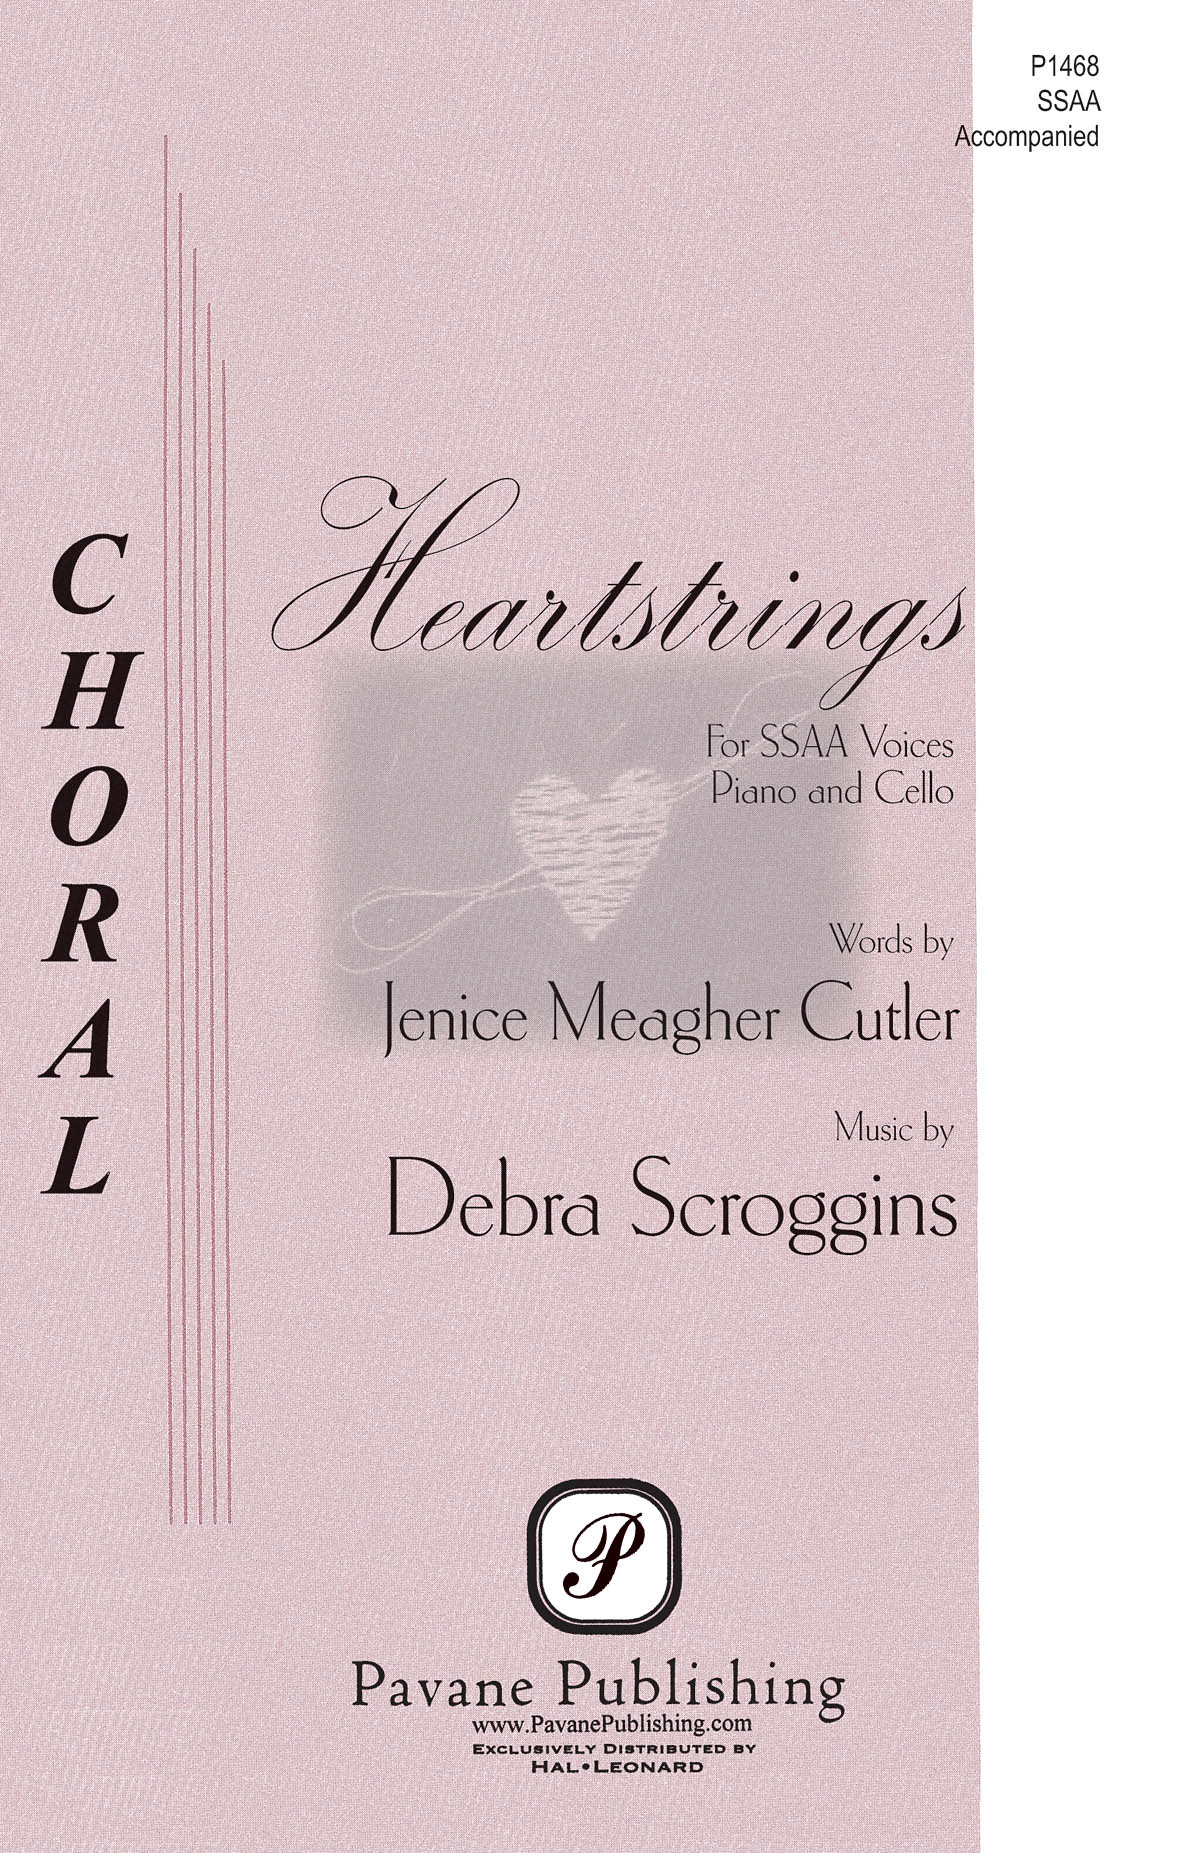 Debra Scroggins: Heartstrings (SSAA)